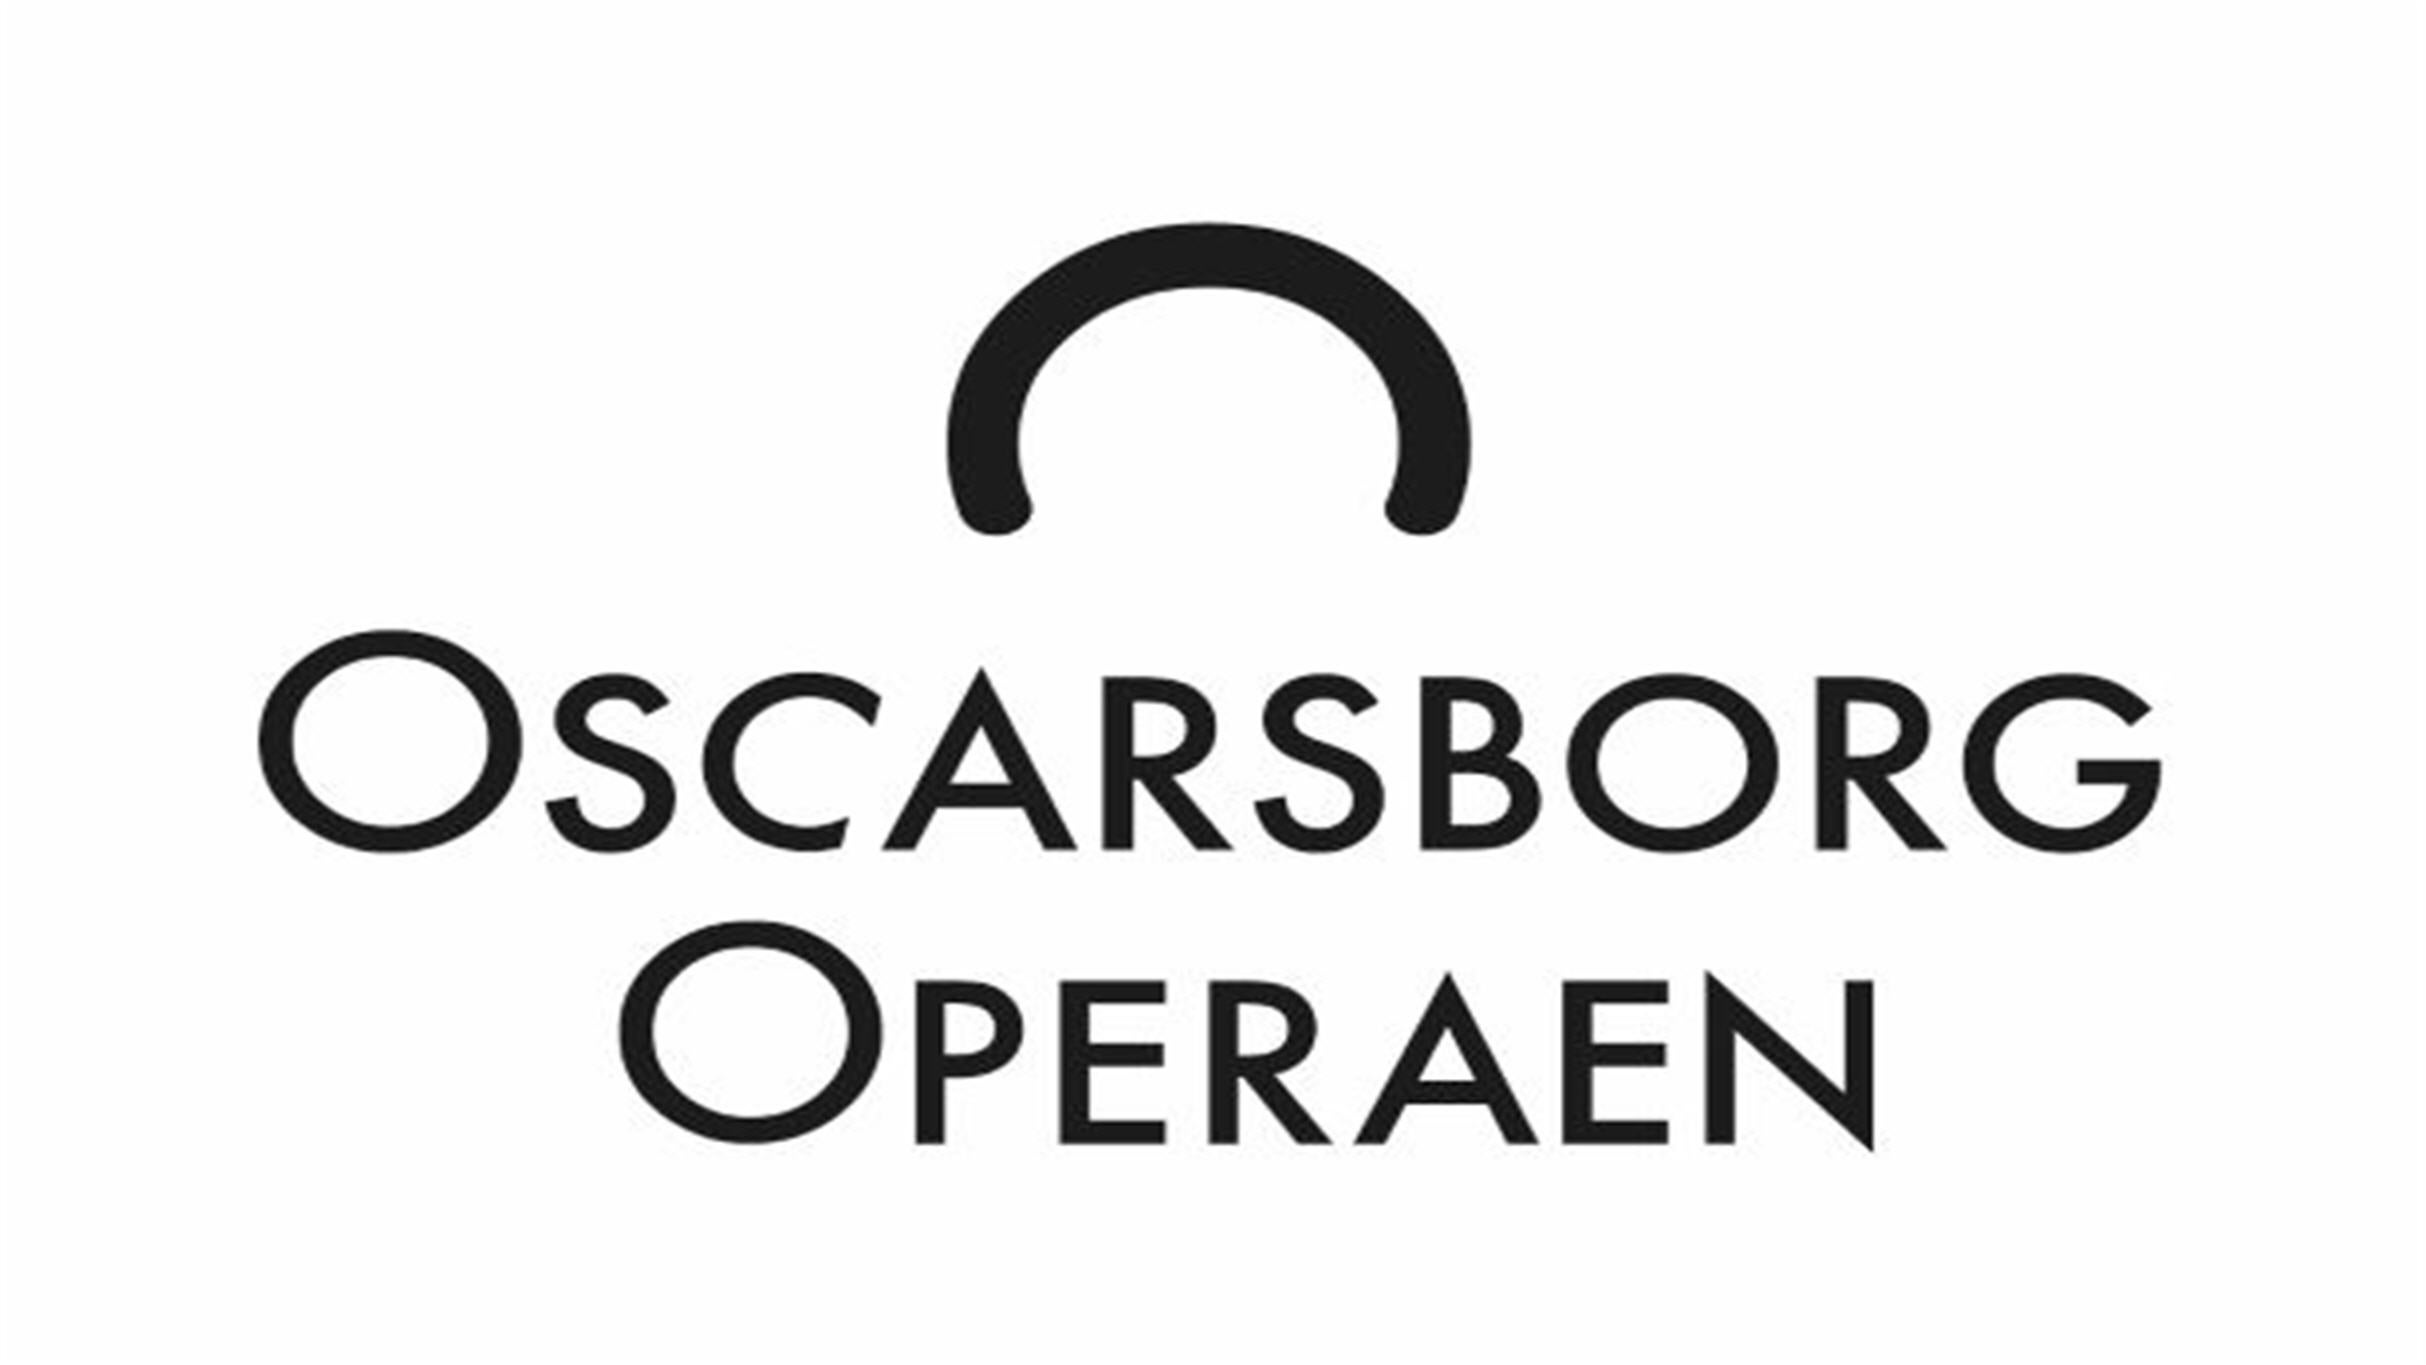 Oscarsborgoperaen presale information on freepresalepasswords.com